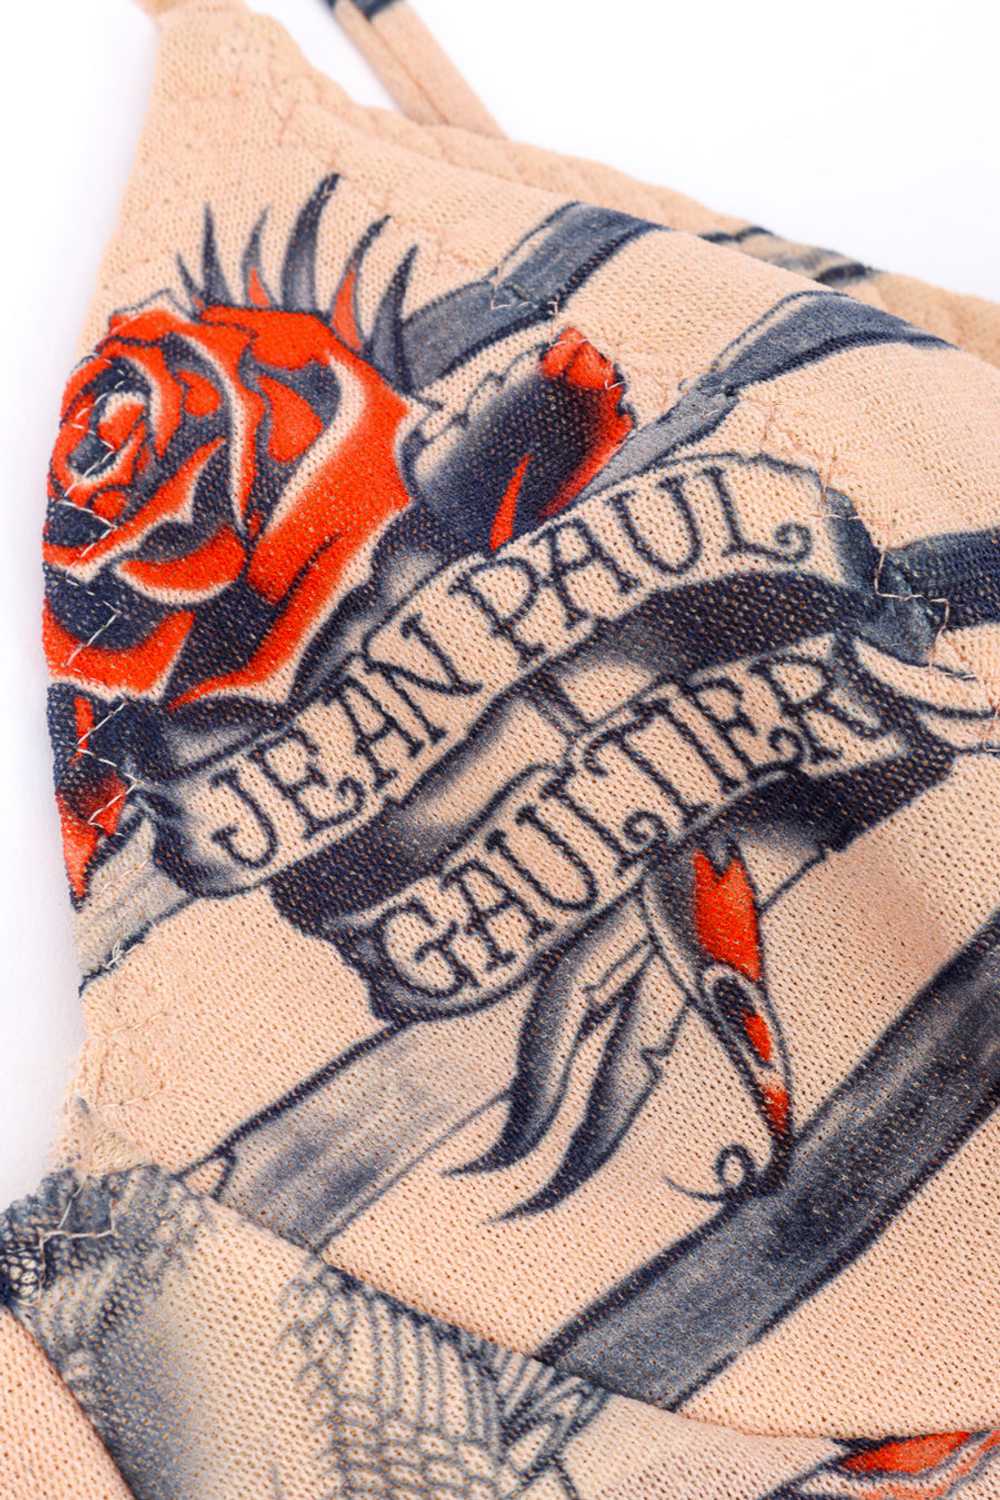 JEAN PAUL GAULTIER 2012 S/S Soleil Tattoo Dress - image 7